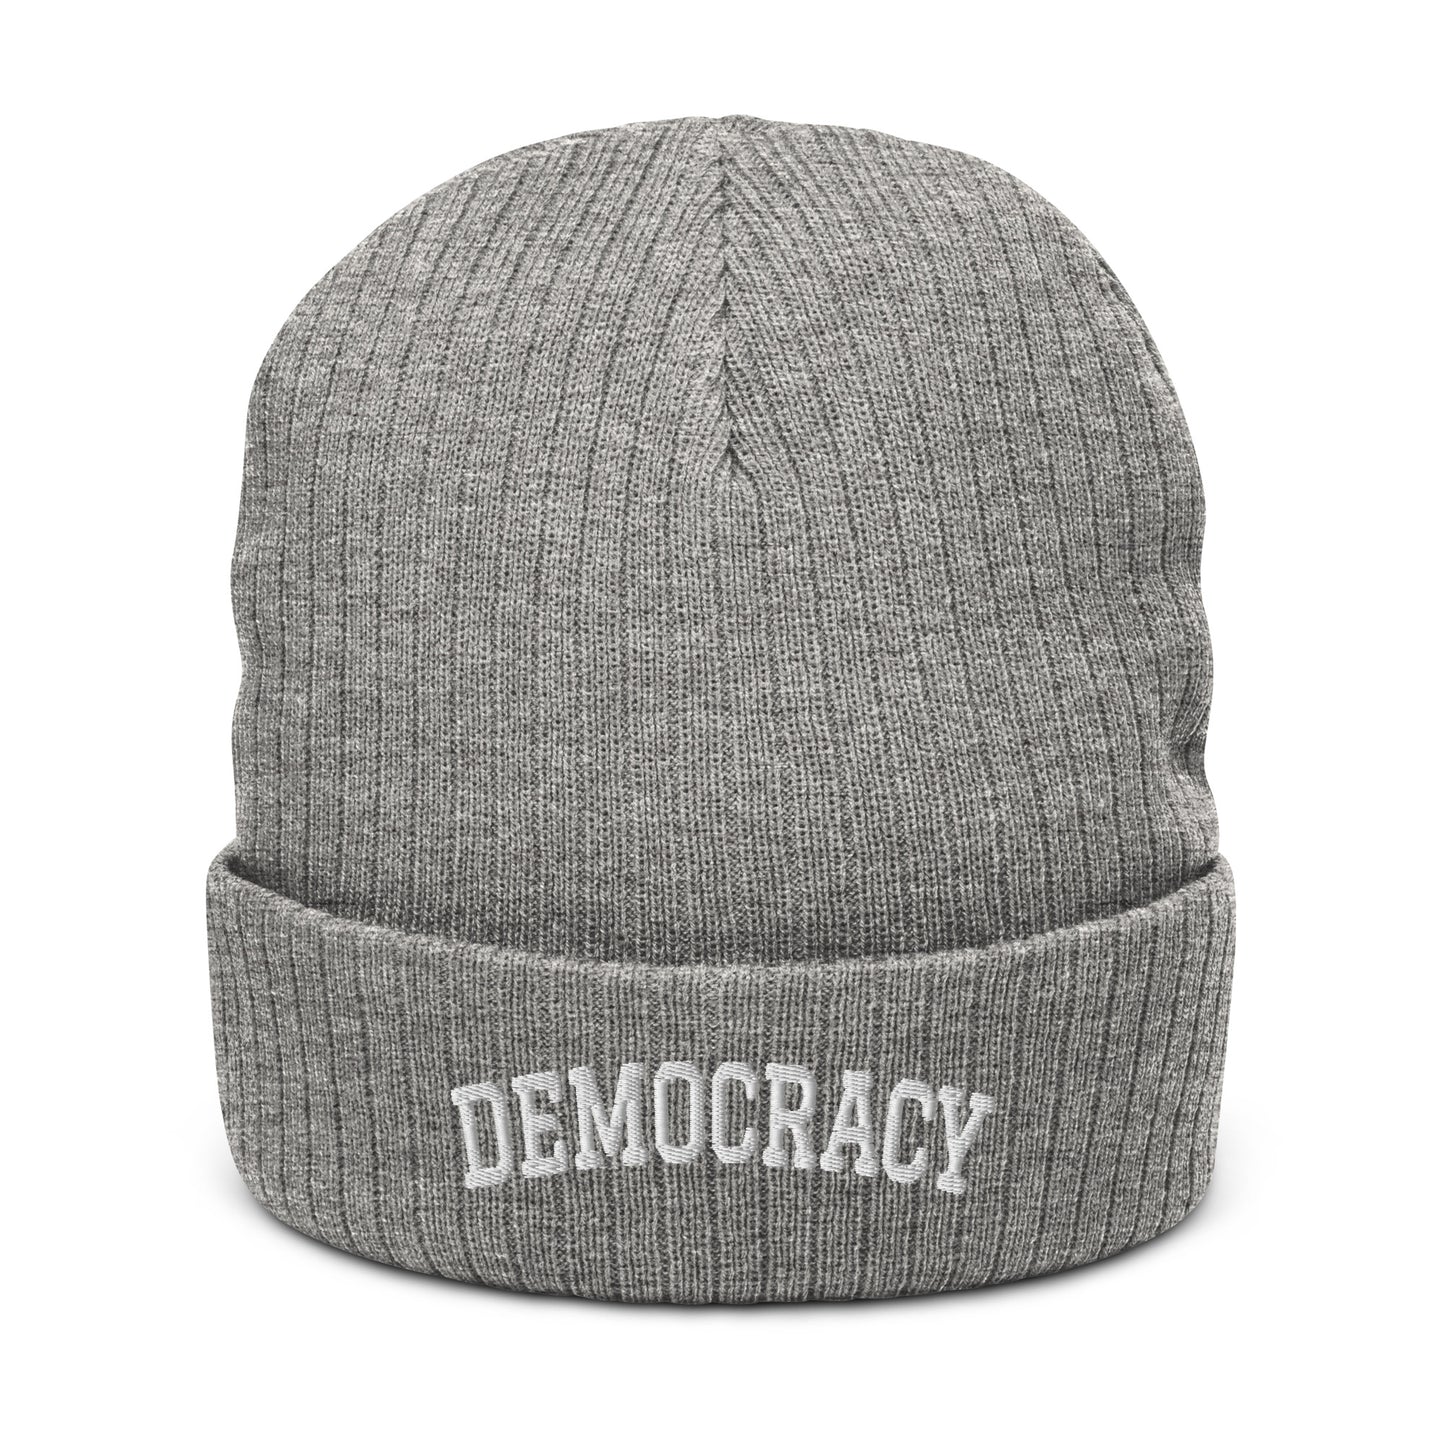 DEMOCRACY - Ribbed Knit Beanie